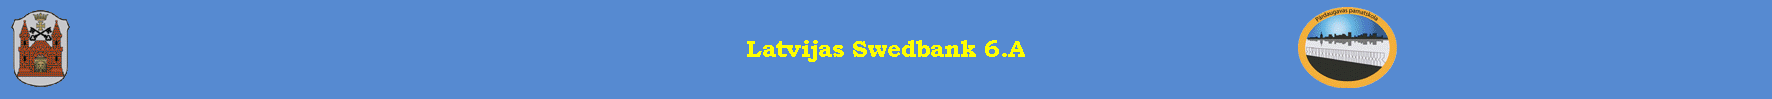 Latvijas Swedbank 6.A